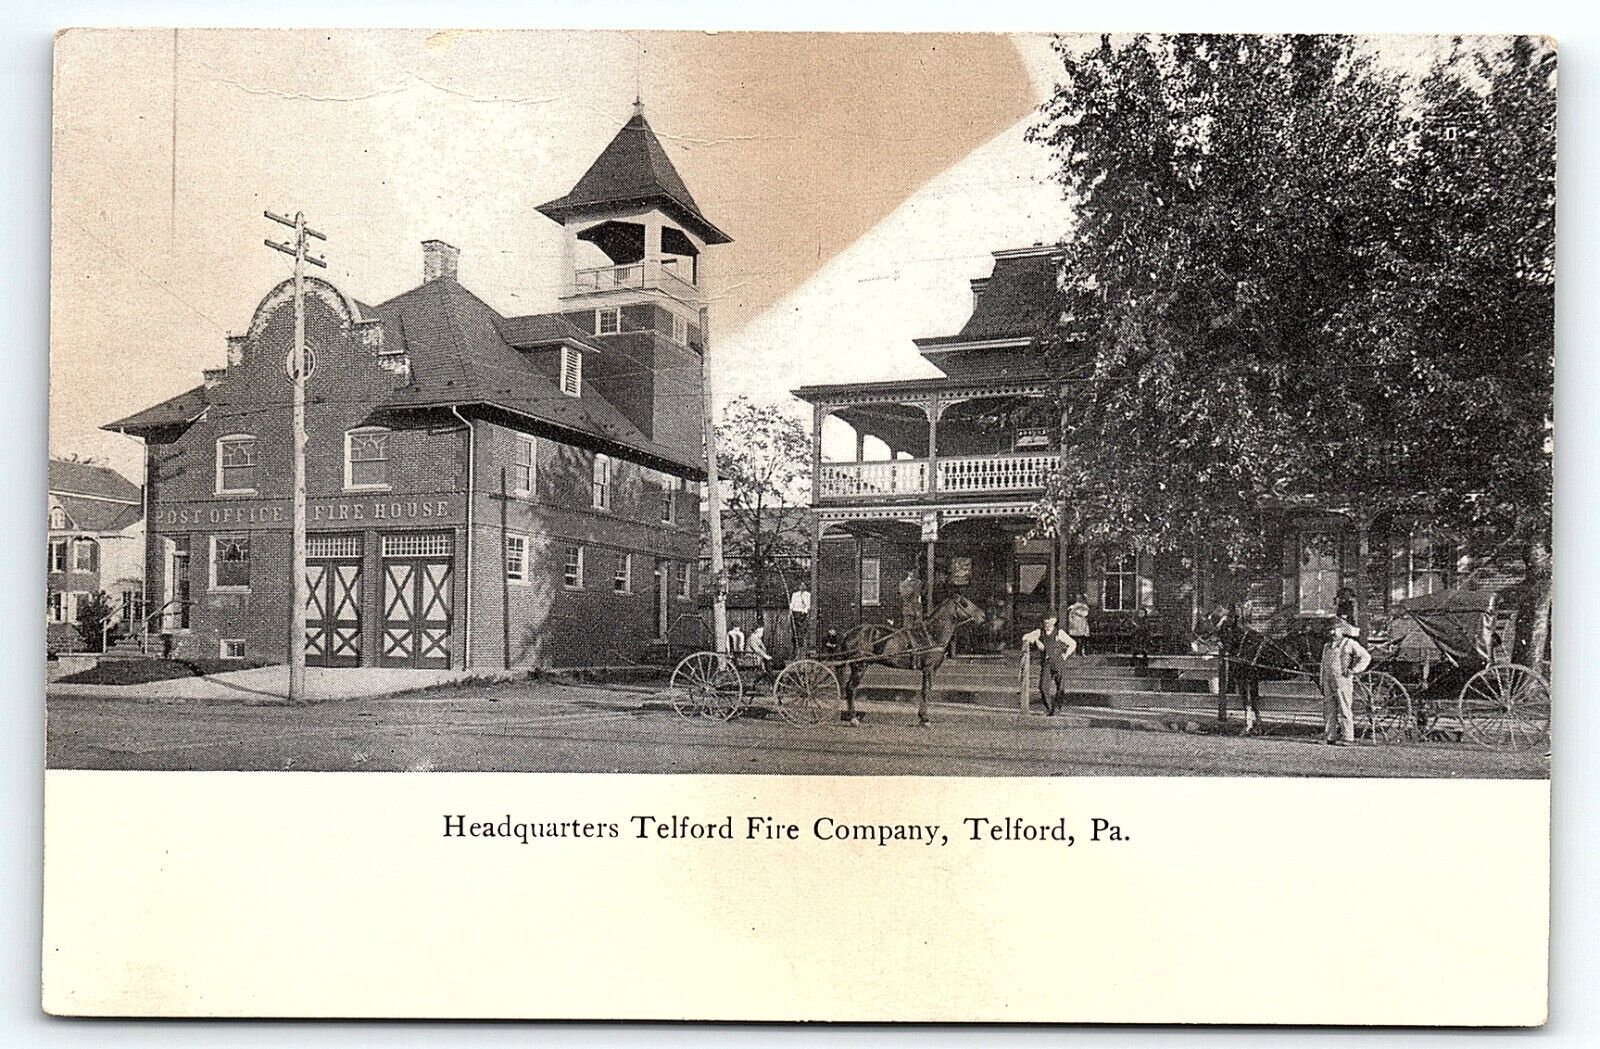 c1910 TELFORD PA HEADQUARTERS TELFORD FIRE HOUSE COMPANY FIREMEN POSTCARD P3913